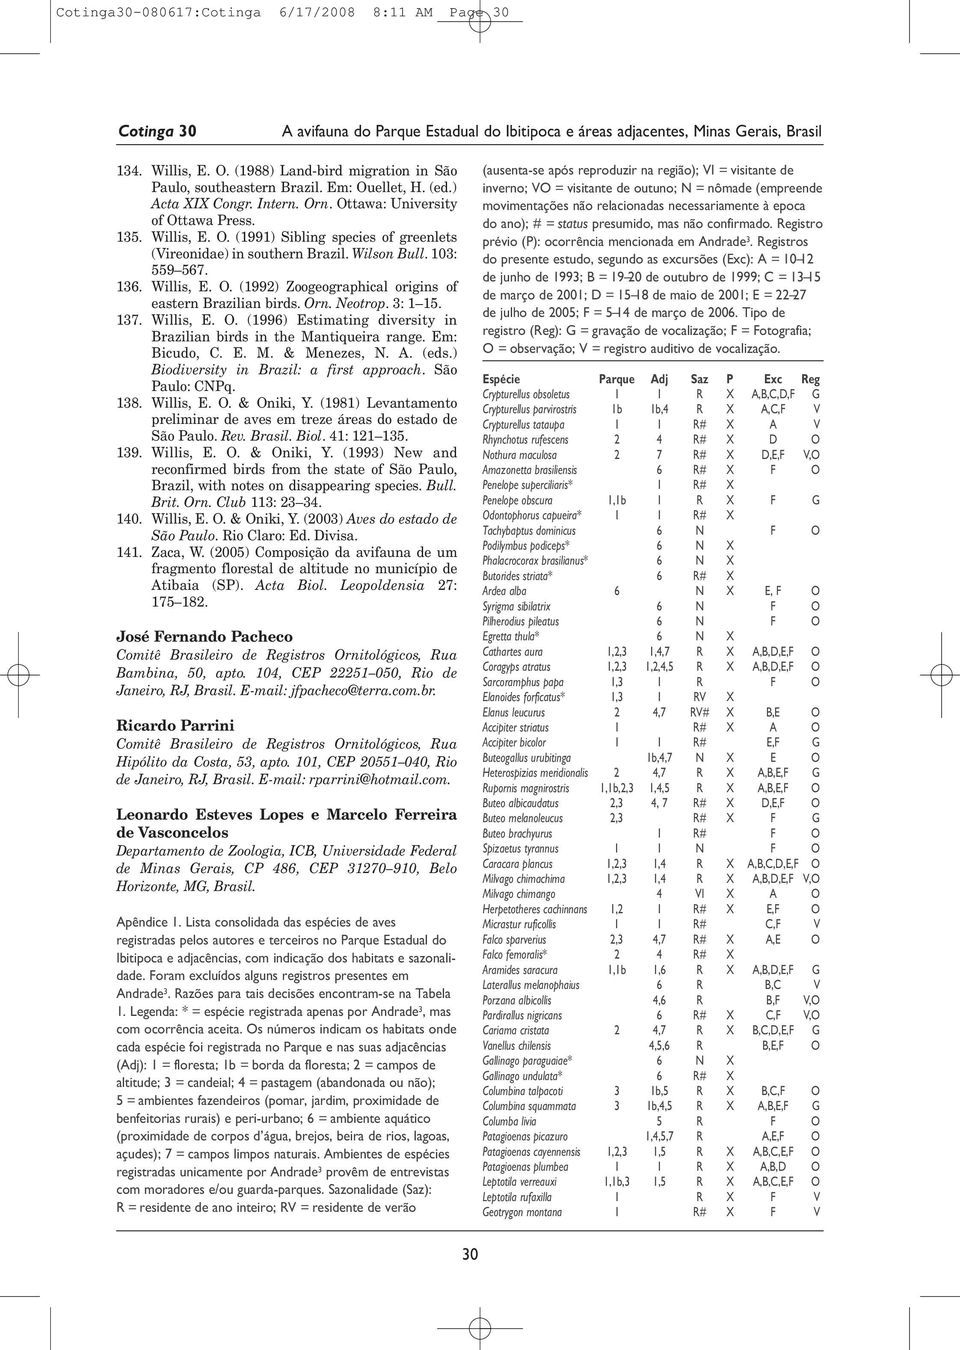 Orn. Neotrop. 3: 1 15. 137. Willis, E. O. (1996) Estimating diversity in Brazilian birds in the Mantiqueira range. Em: Bicudo, C. E. M. & Menezes, N. A. (eds.